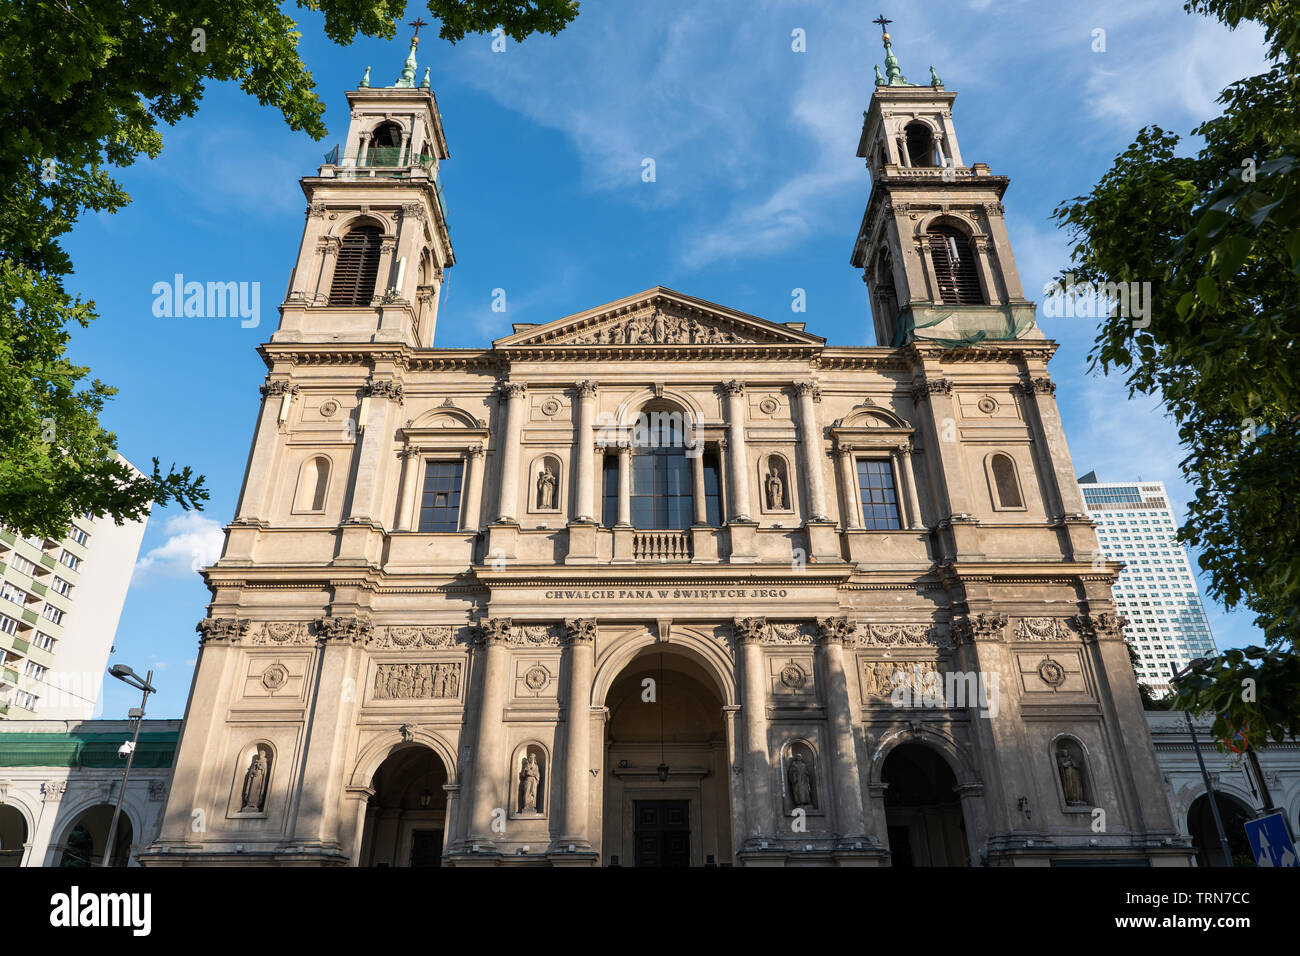 All Saints Church in Warsaw in Poland, 19th century Renaissance architecture, city landmark. Stock Photo